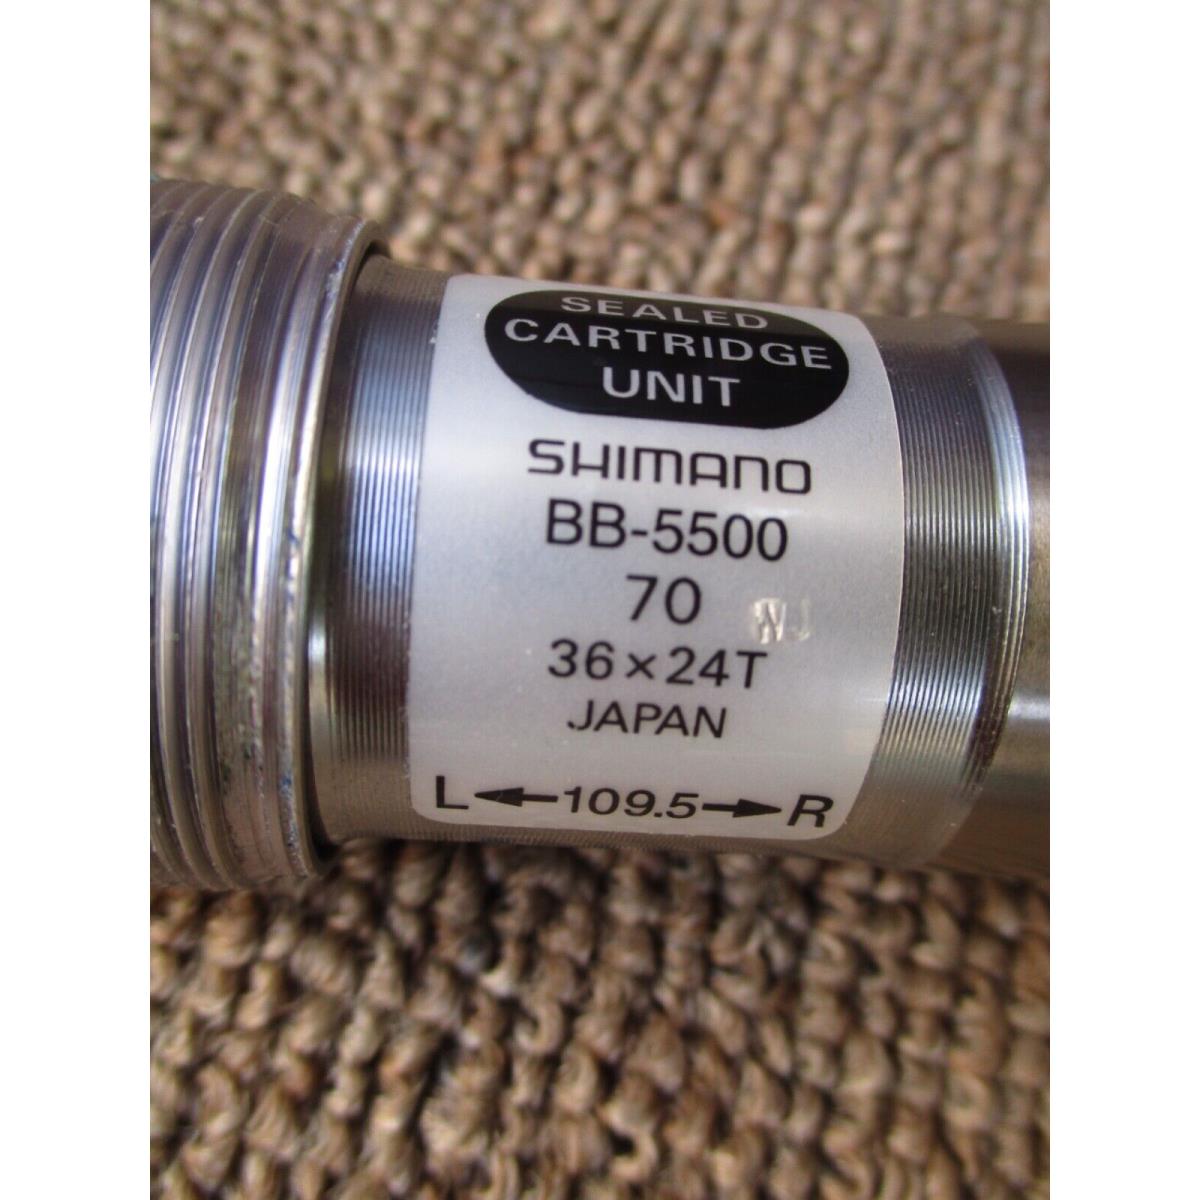 Shimano 105 Octalink Cartridge Bottom Bracket BB-5500 109.5mm Italian